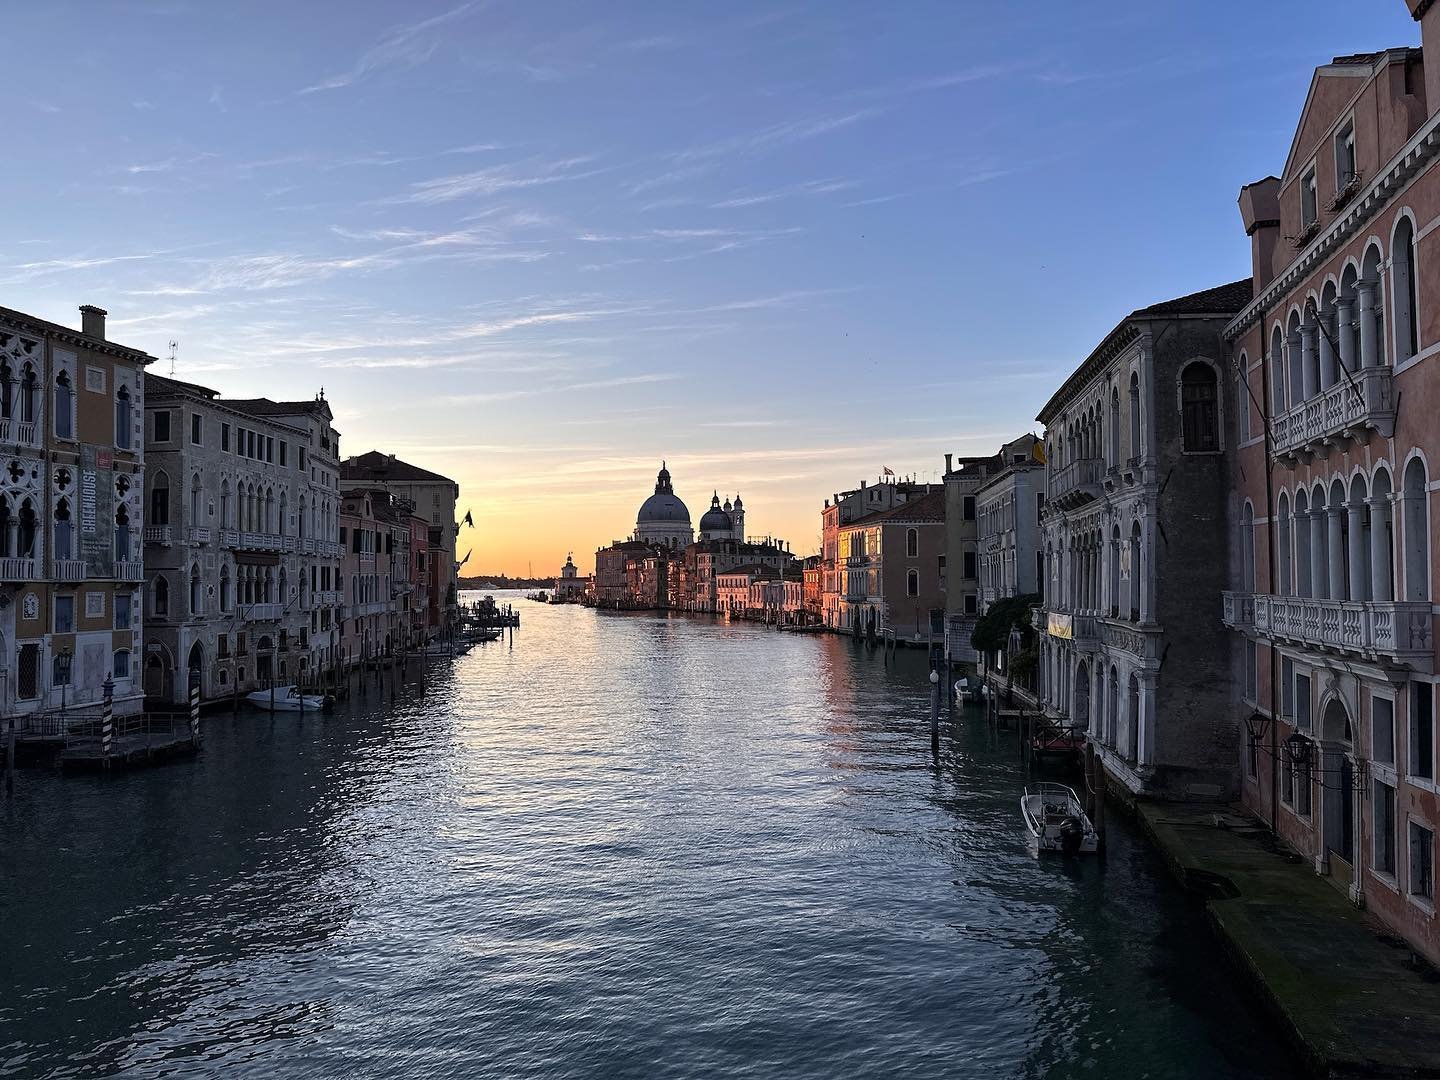 Venetian views. #dogontheforge